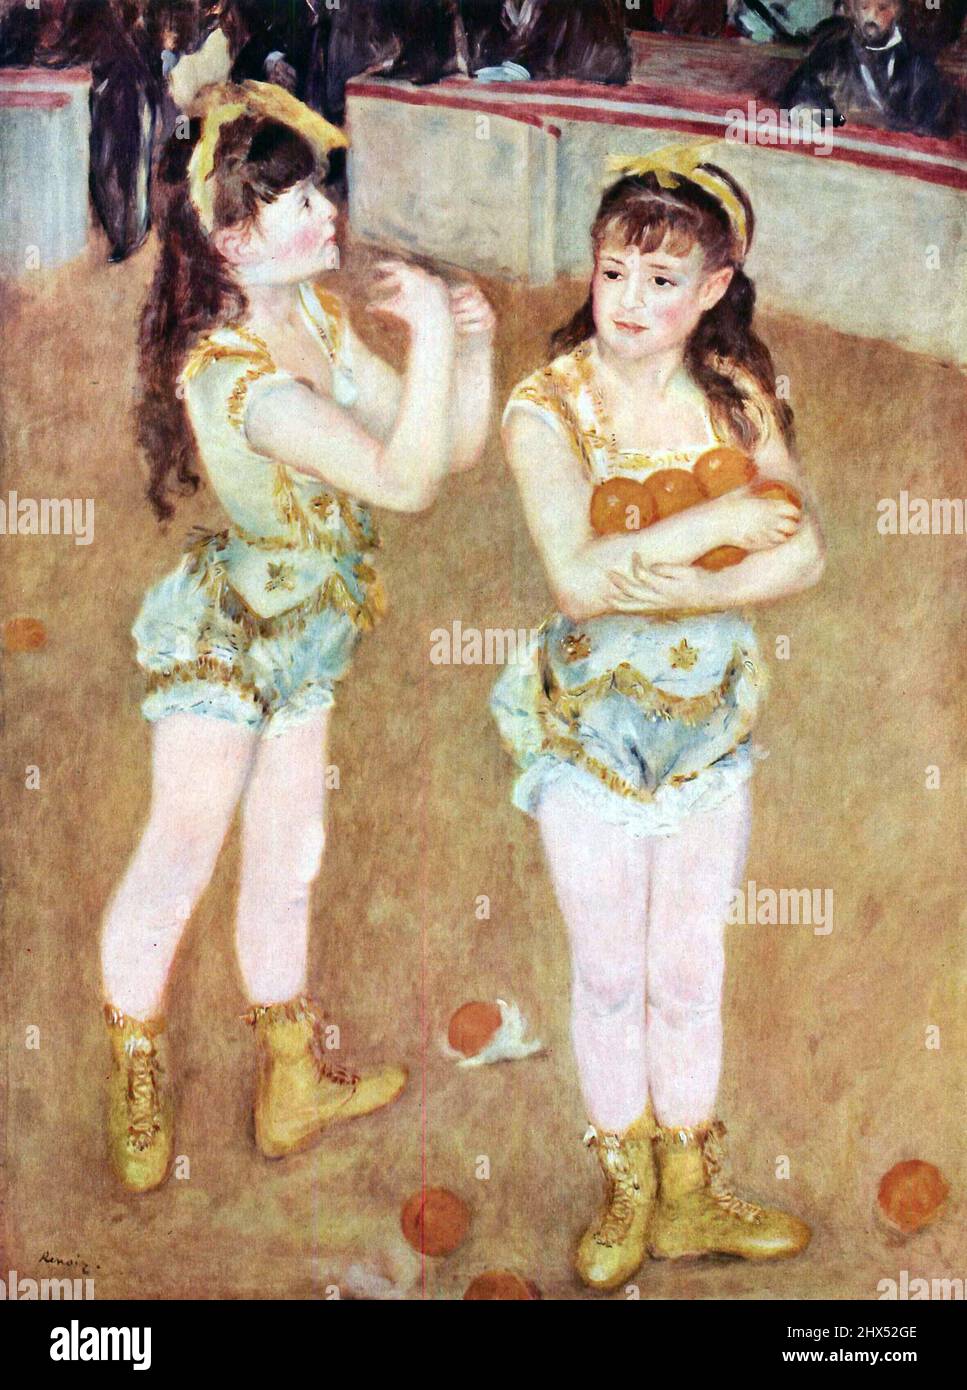 Auguste Renoir; acrobates au Cirque Fernando (Francisca et Angelina Wartenberg) (1879), im Zirkus Fernando, 皮埃尔-奥古斯特·雷诺阿, 在馬戲團, W cyrku, Au cirque Banque D'Images